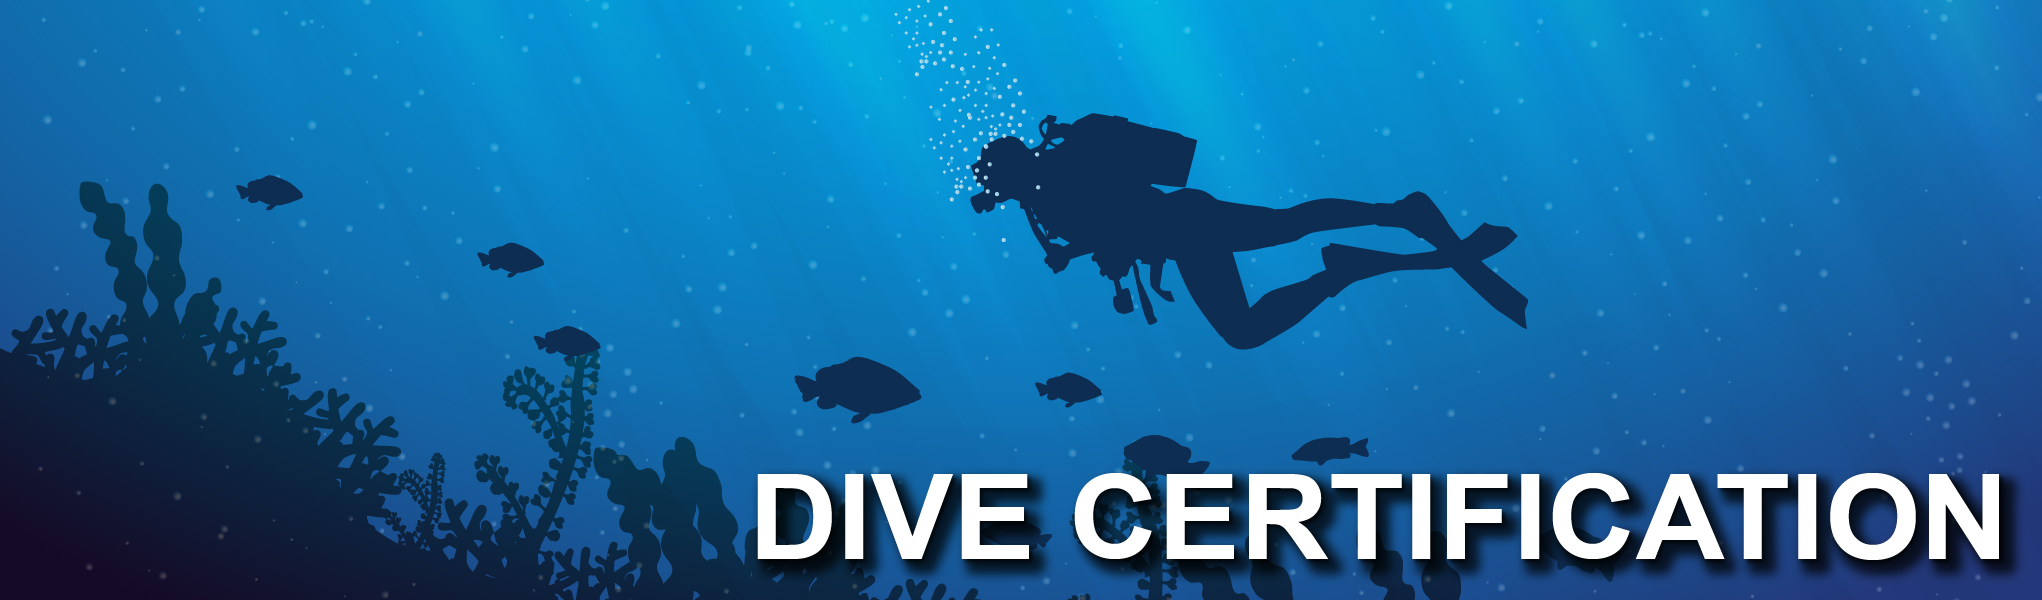 dive_certification.jpg